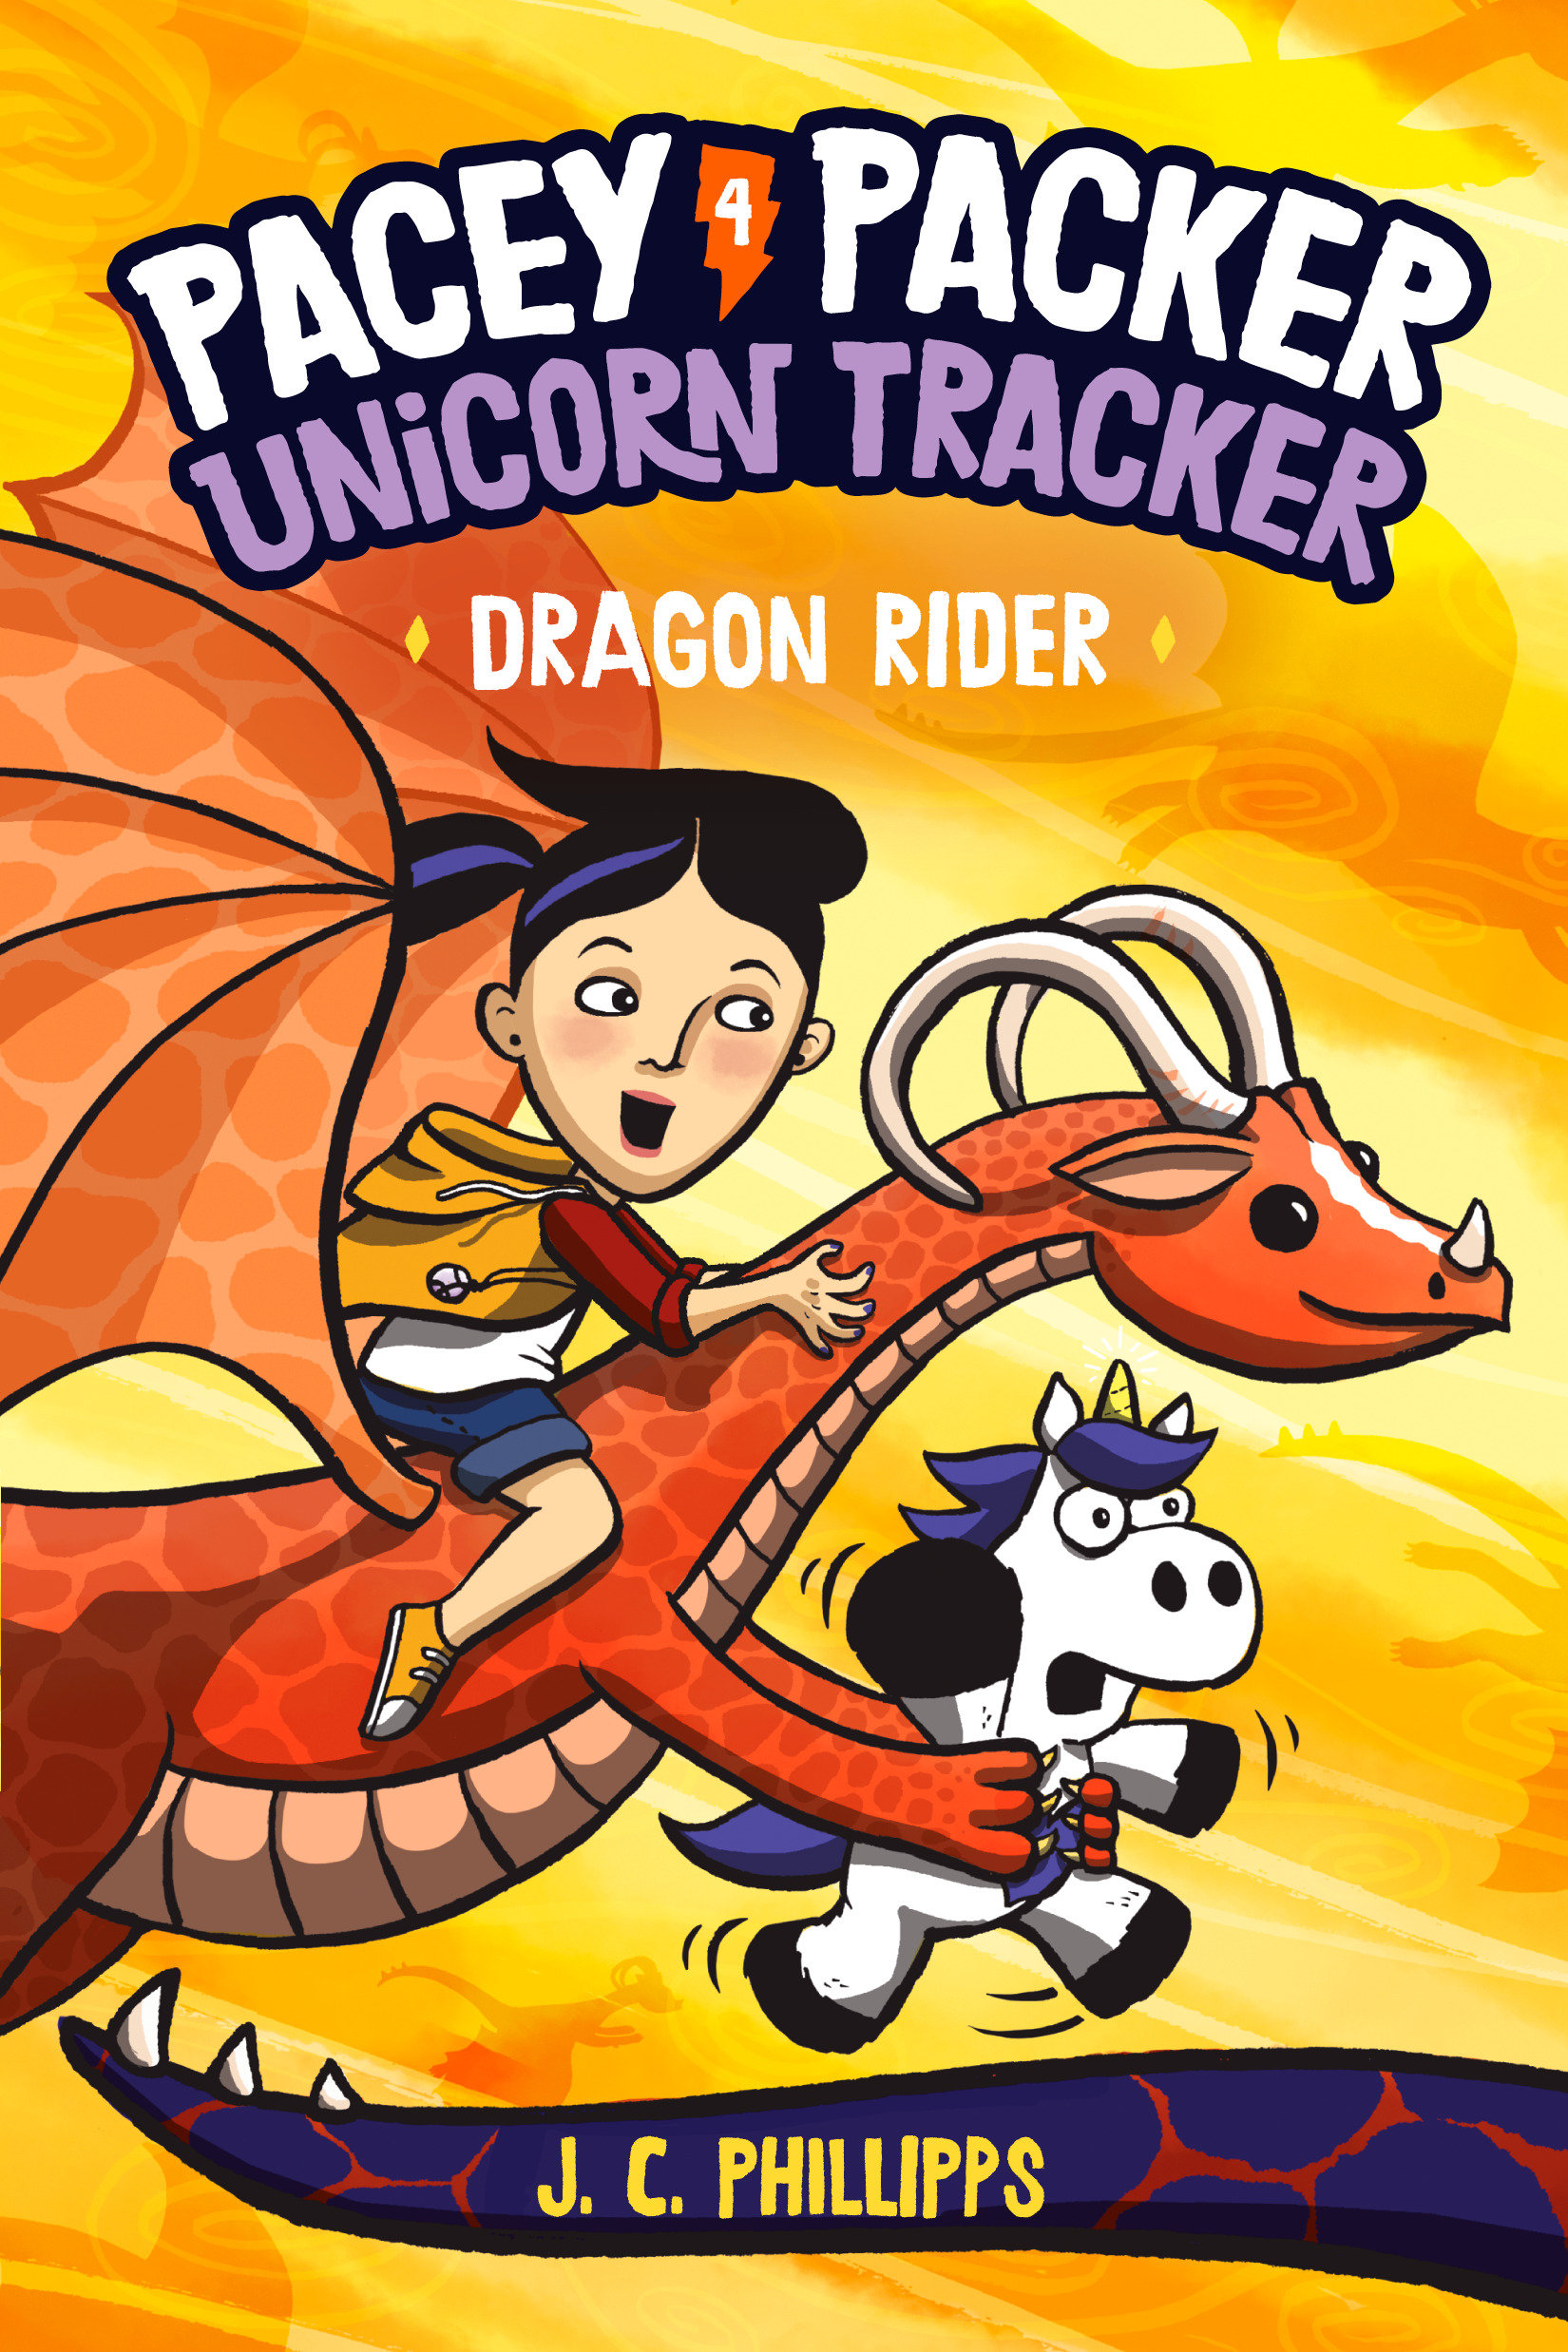 Pacey Packer Unicorn Tracker Hardcover Graphic Novel Volume 4 Dragon Rider